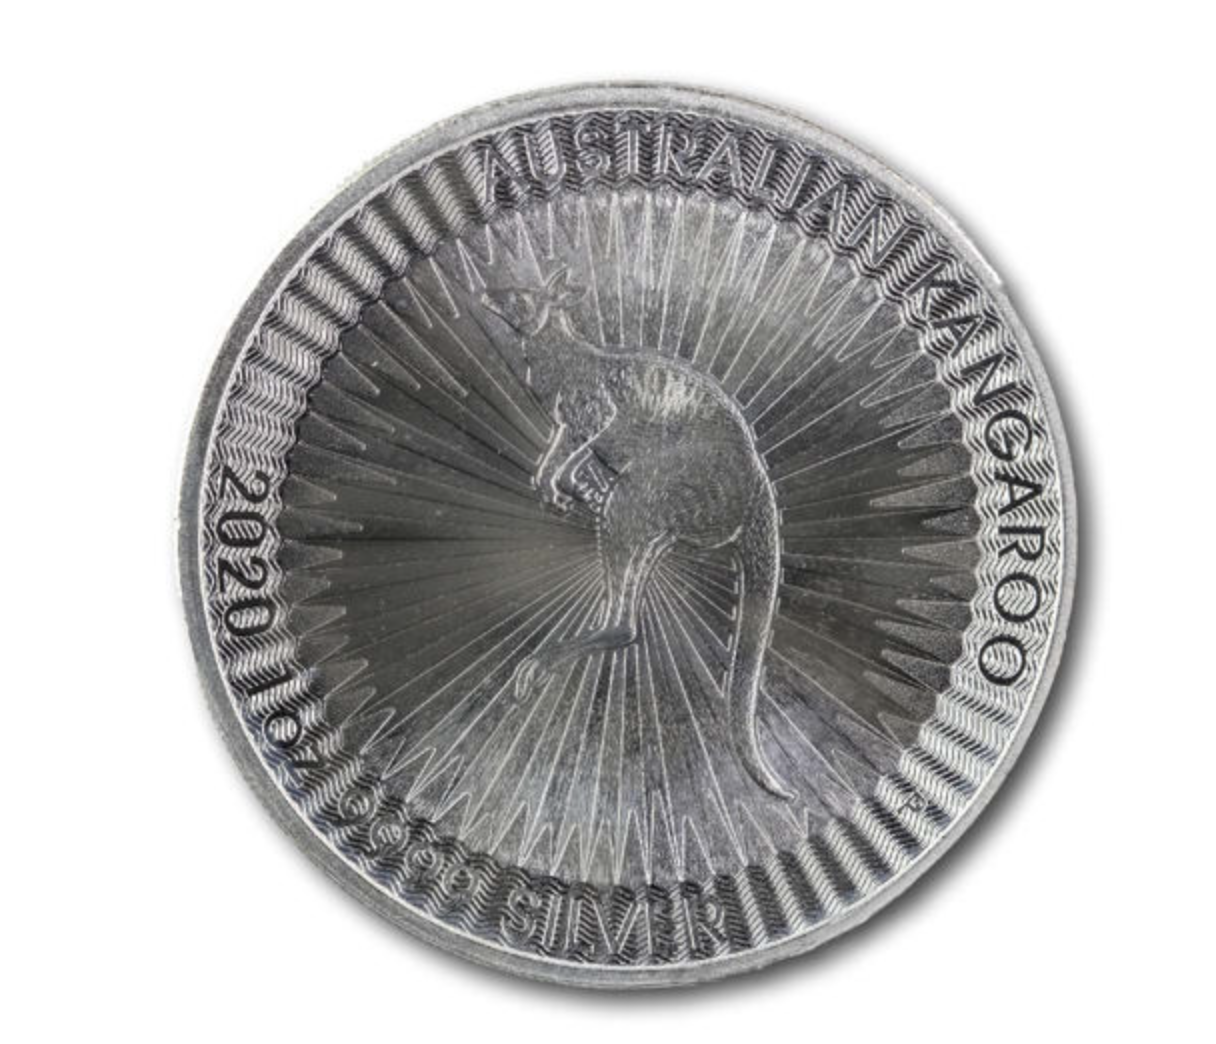 bgasc platinum coin